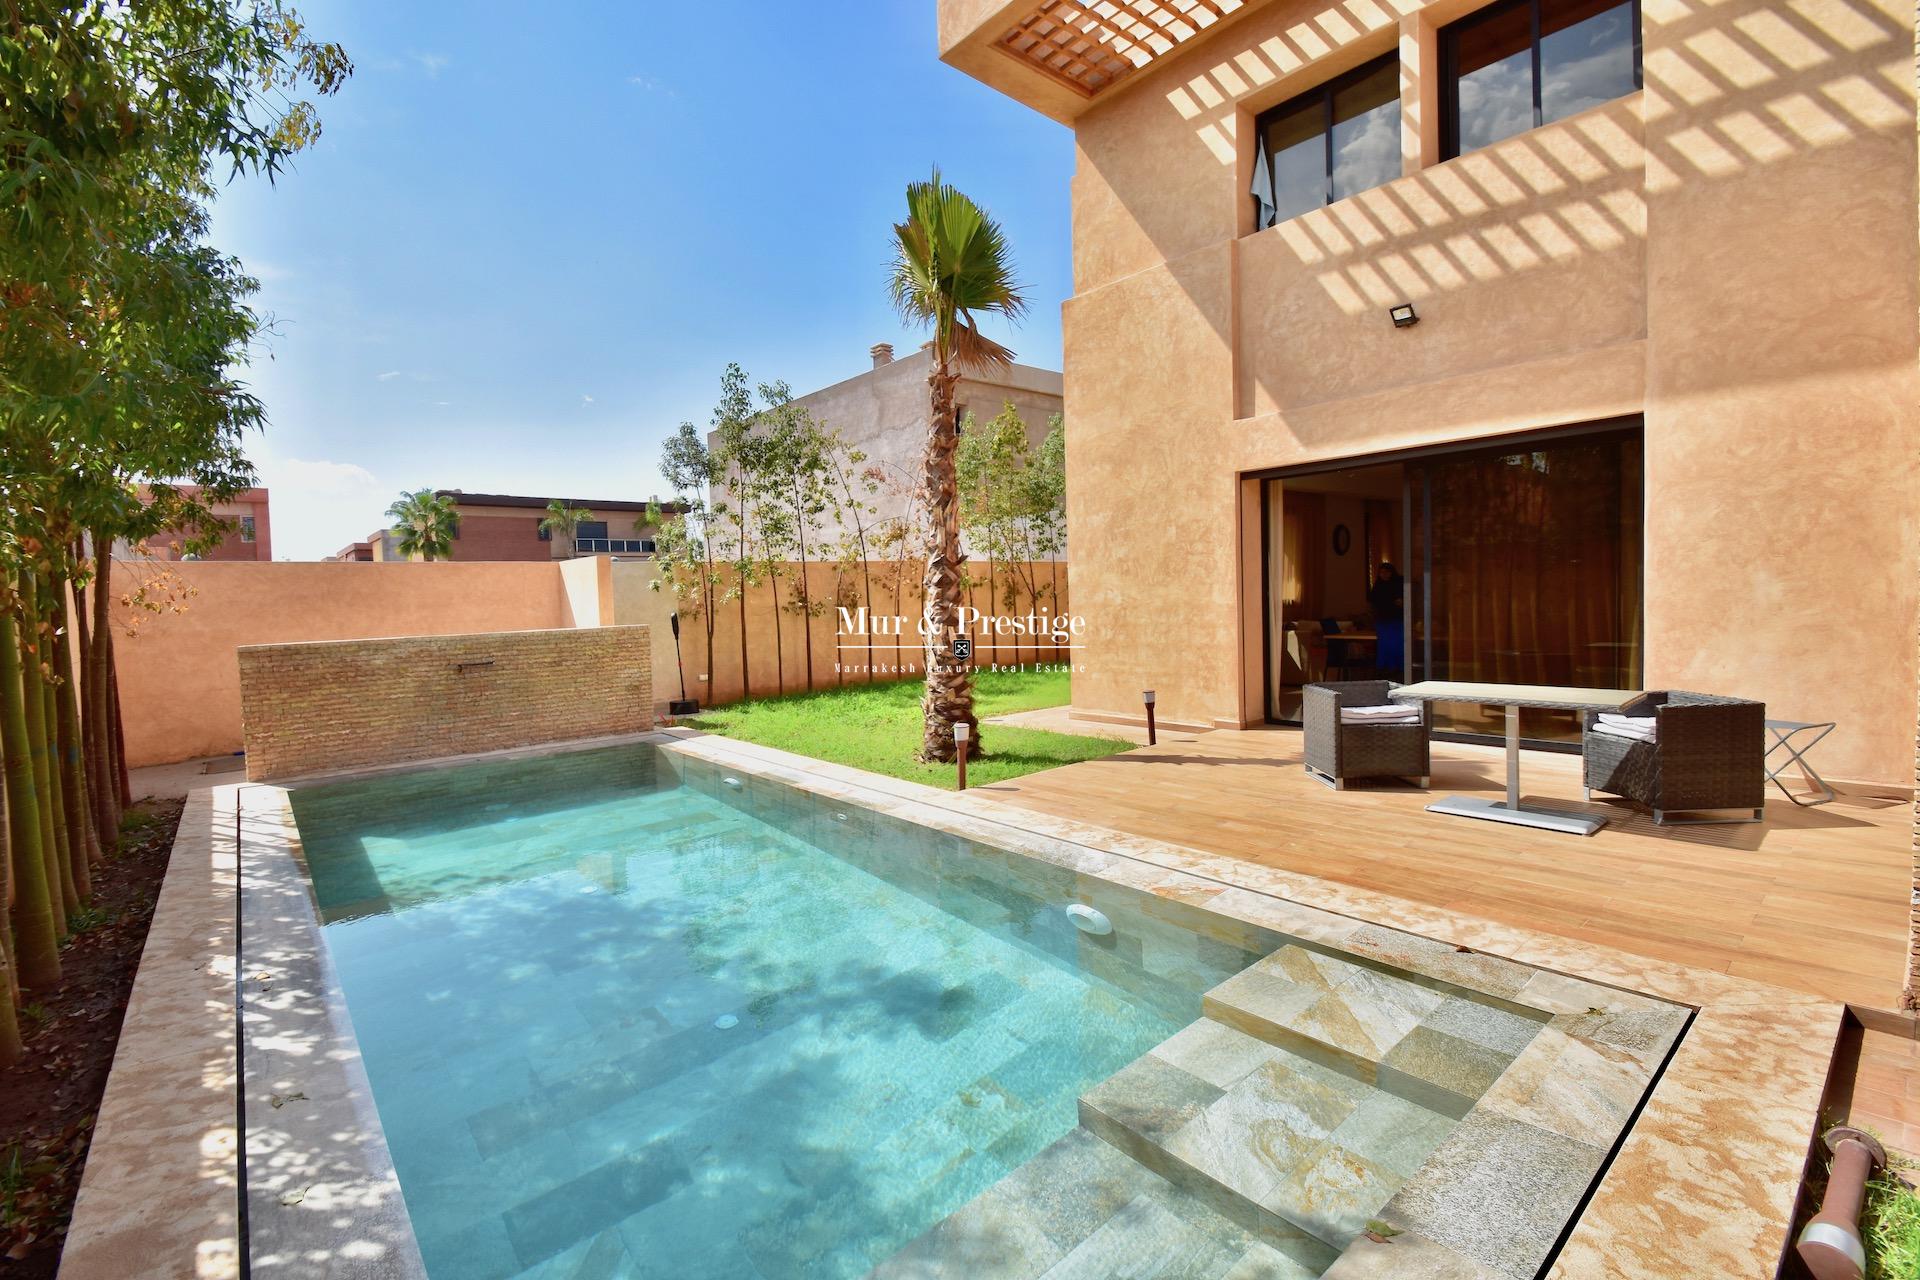 Agence Immobilière Marrakech - Vente Maison Moderne